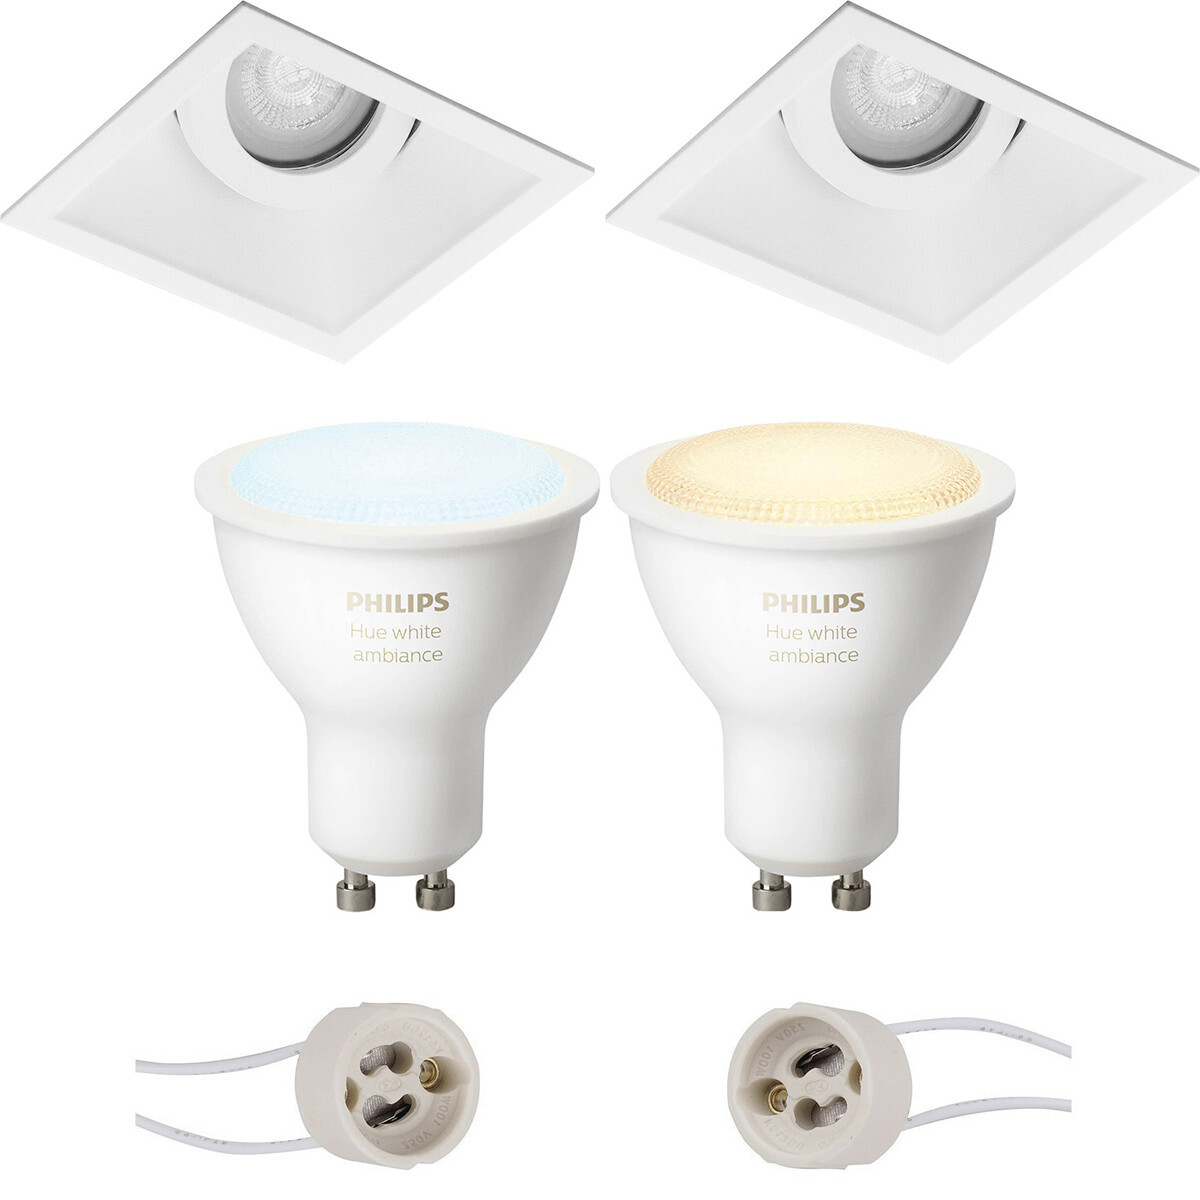 Pragmi Zano Pro - Inbouw Vierkant - Mat Wit - Kantelbaar - 93mm - Philips Hue - LED Spot Set GU10 - White Ambiance - Bluetooth